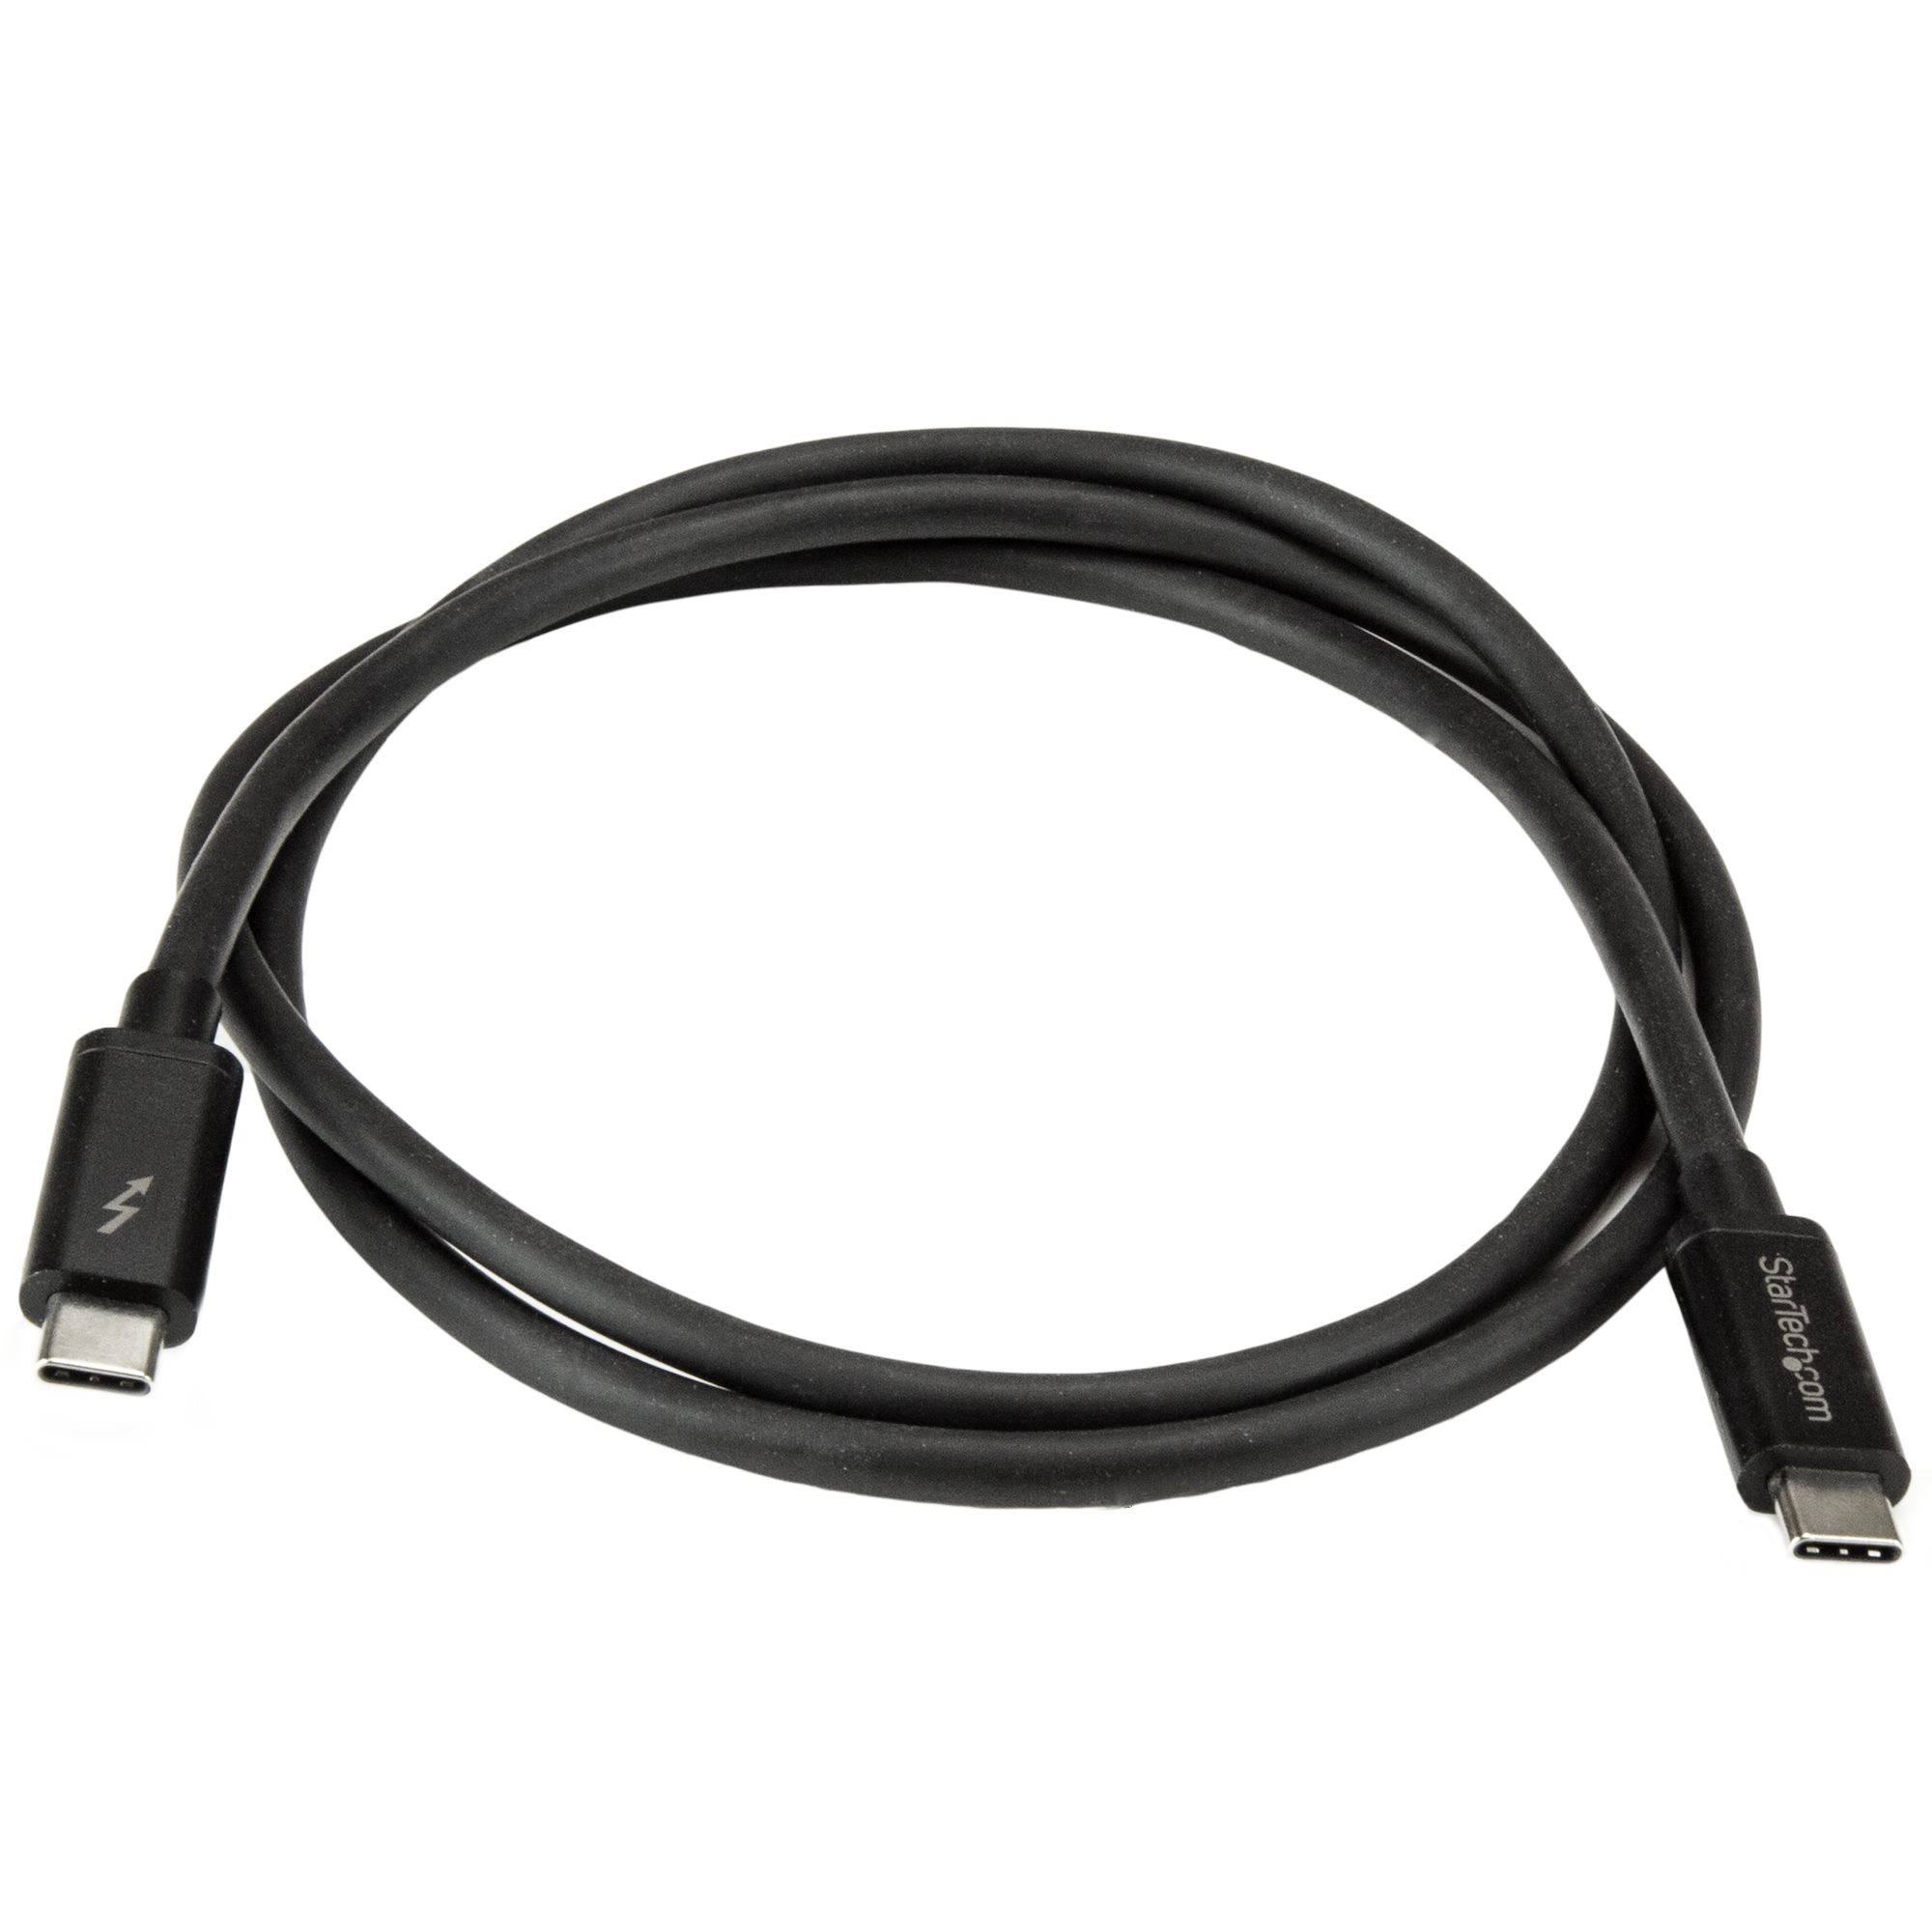 Cable USB C Thunderbolt 3 certificado por Intel - CABLETIME